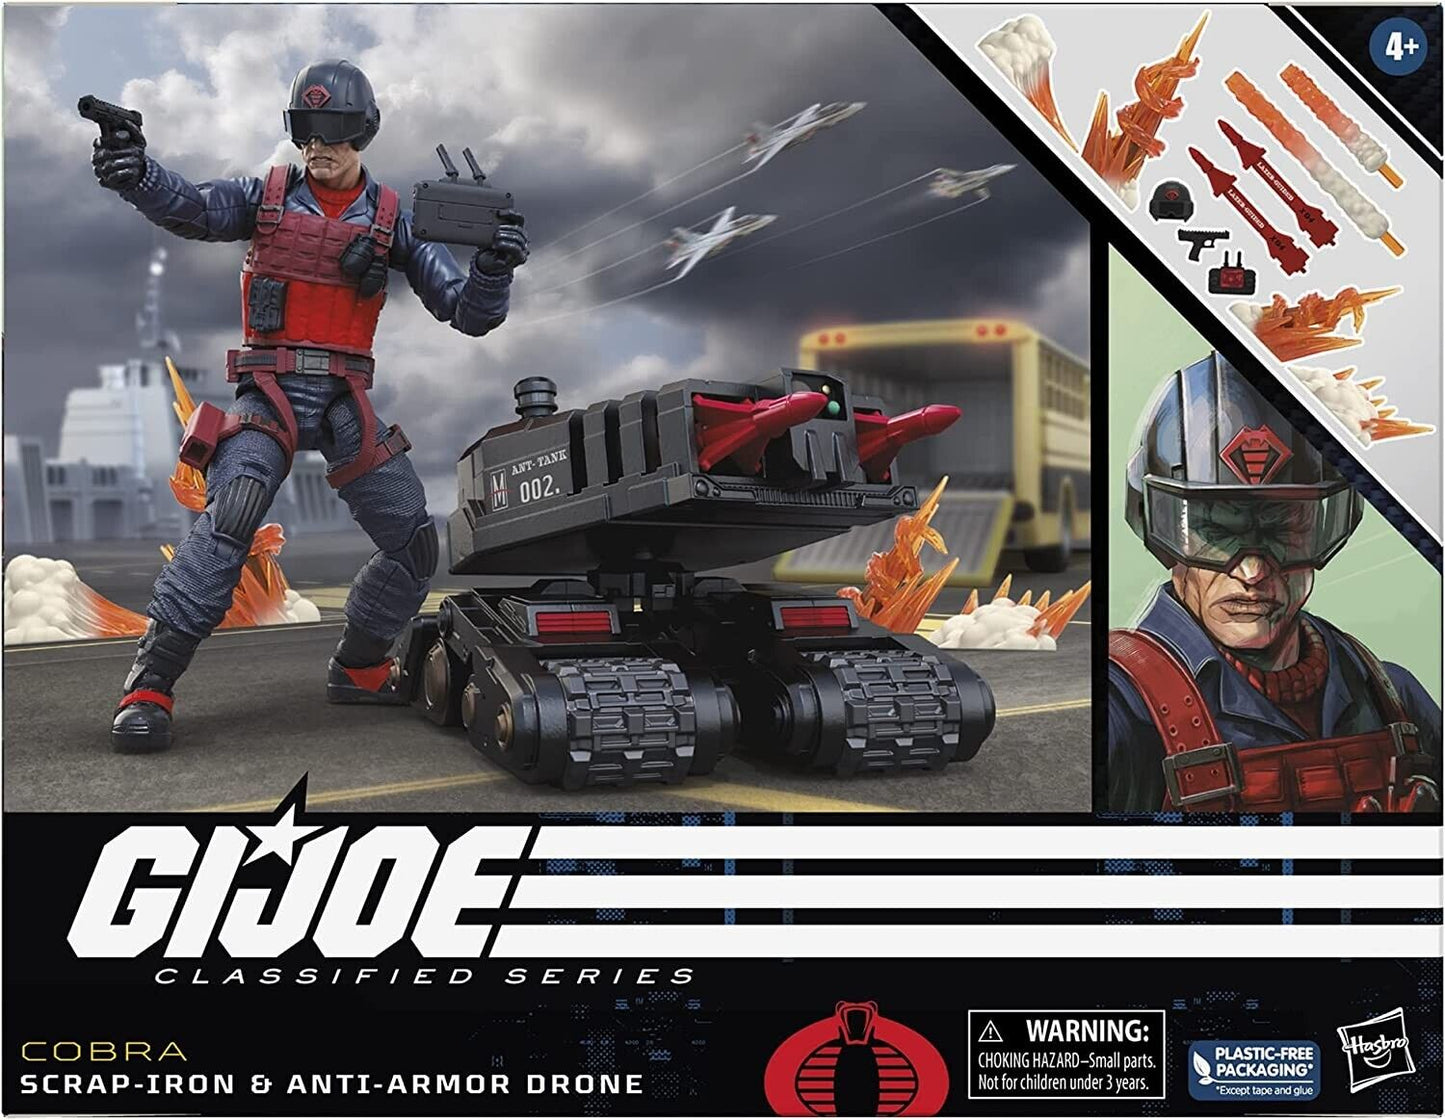 G.I. Joe Classified - Scrap-Iron & Anti-Armor Drone #74 - Action Figure by Hasbro